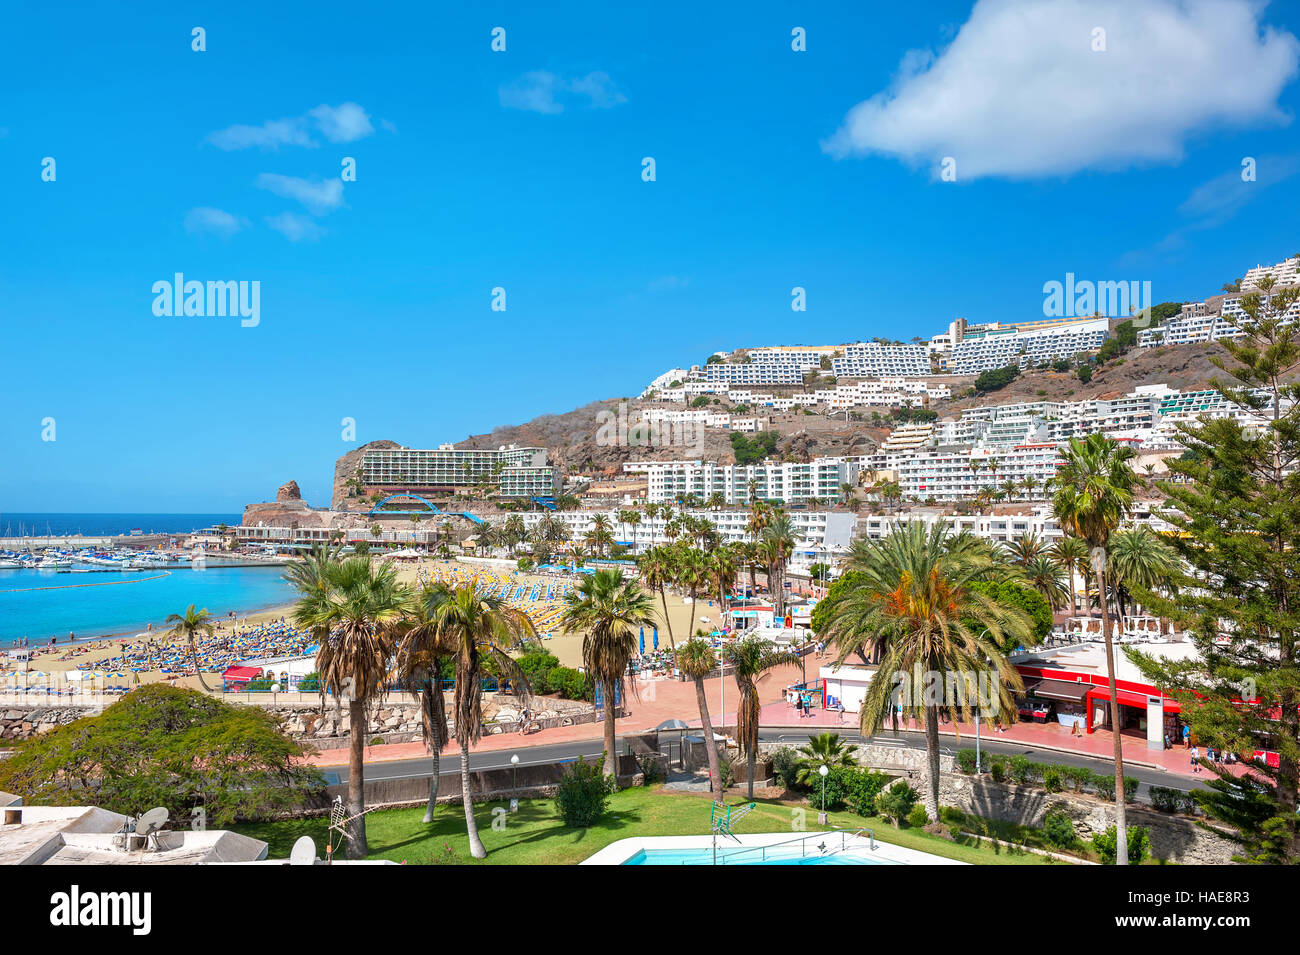 Puerto Rico resort. Gran Canaria. Spain Stock Photo